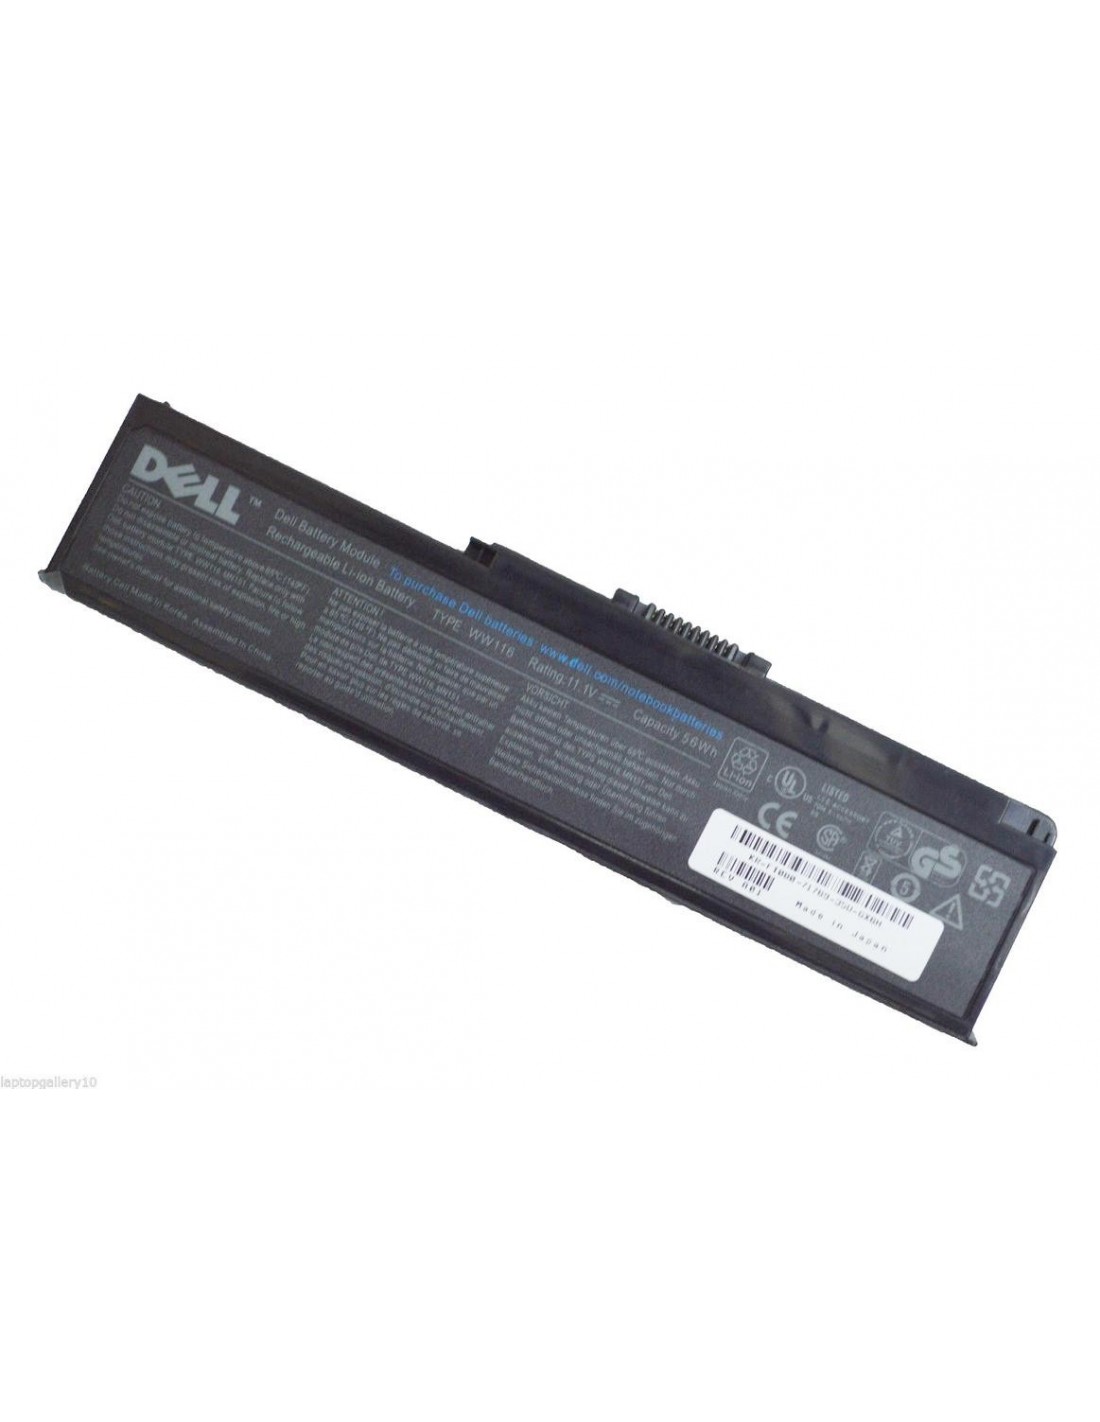 Dell MN154 - 6 Cell WW116 Original Laptop Notebook Battery